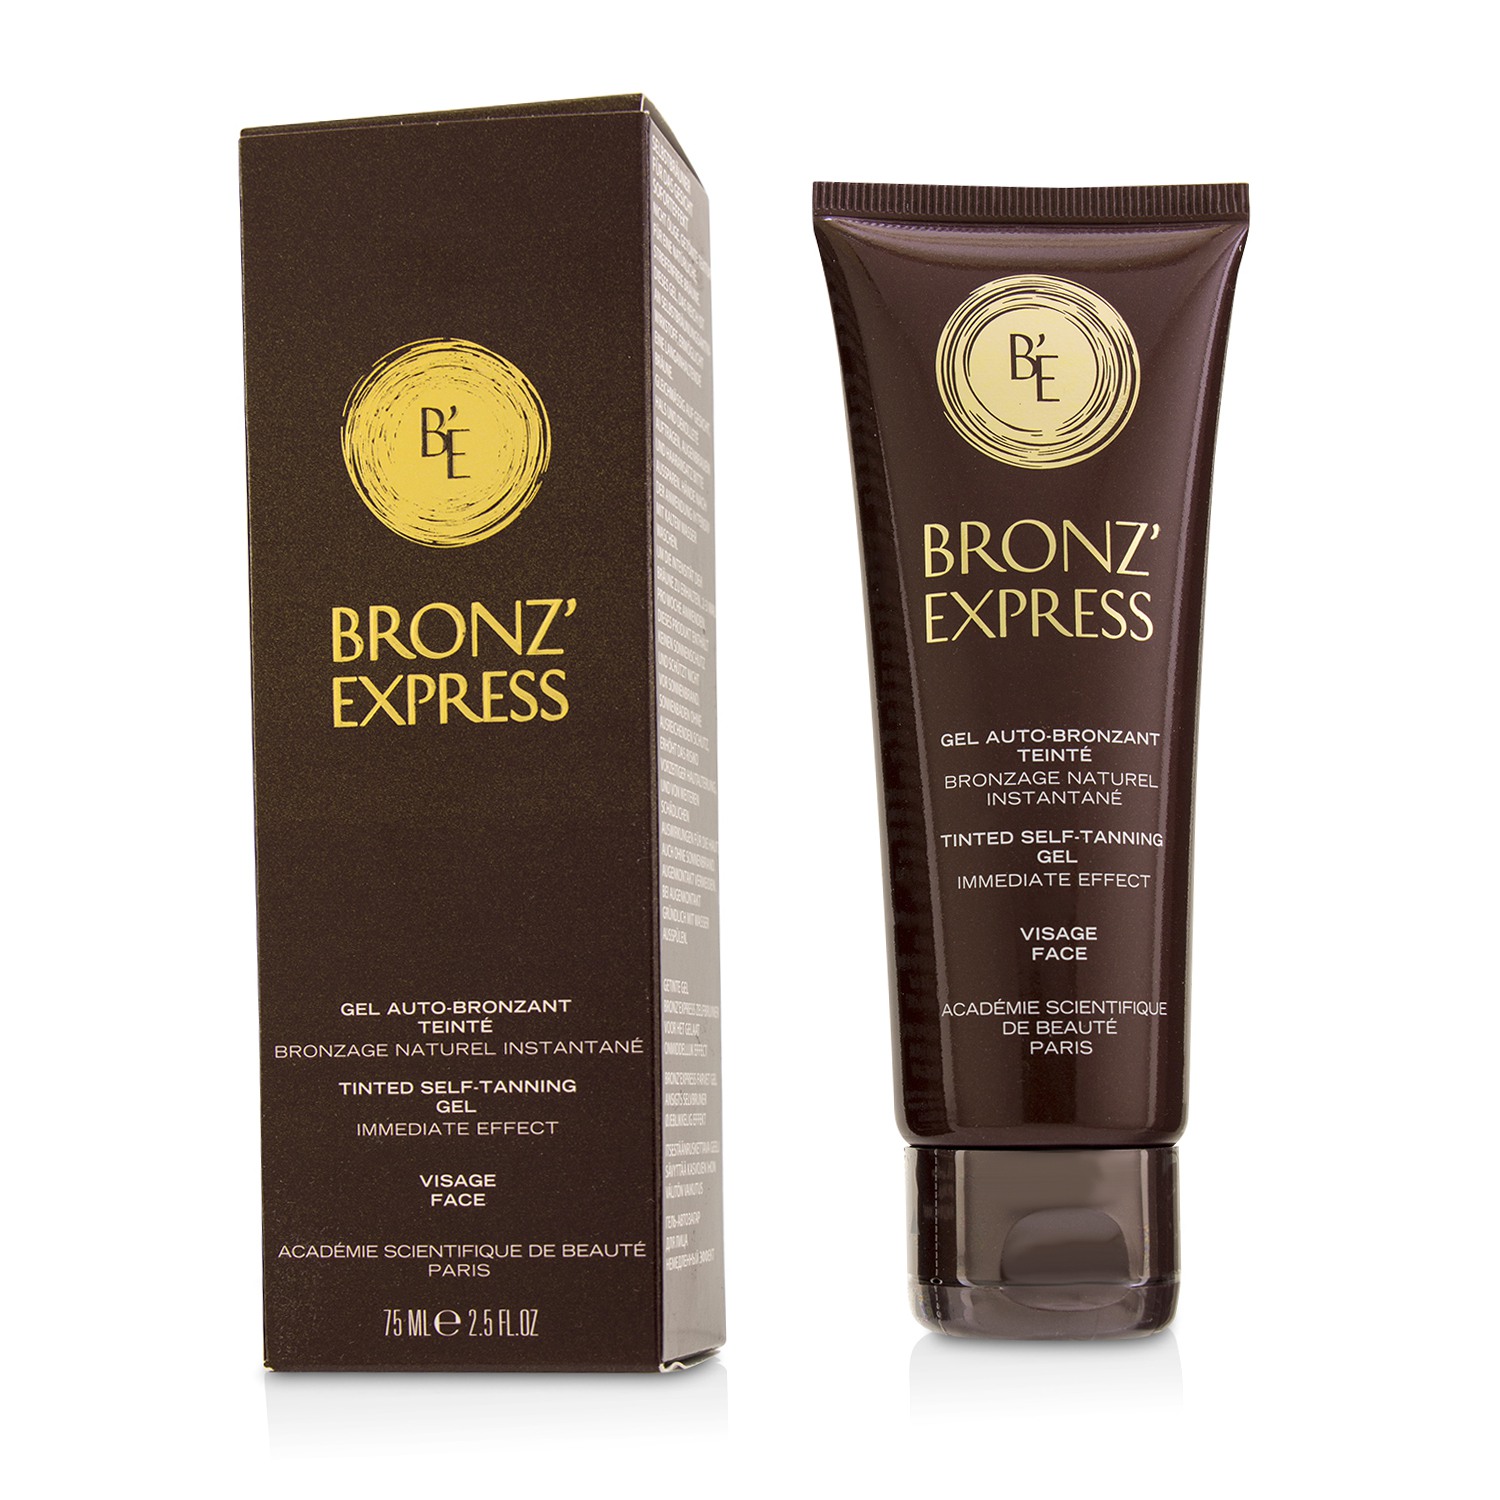 Bronz Express Face Tinted Self-Tanning Gel Academie Image